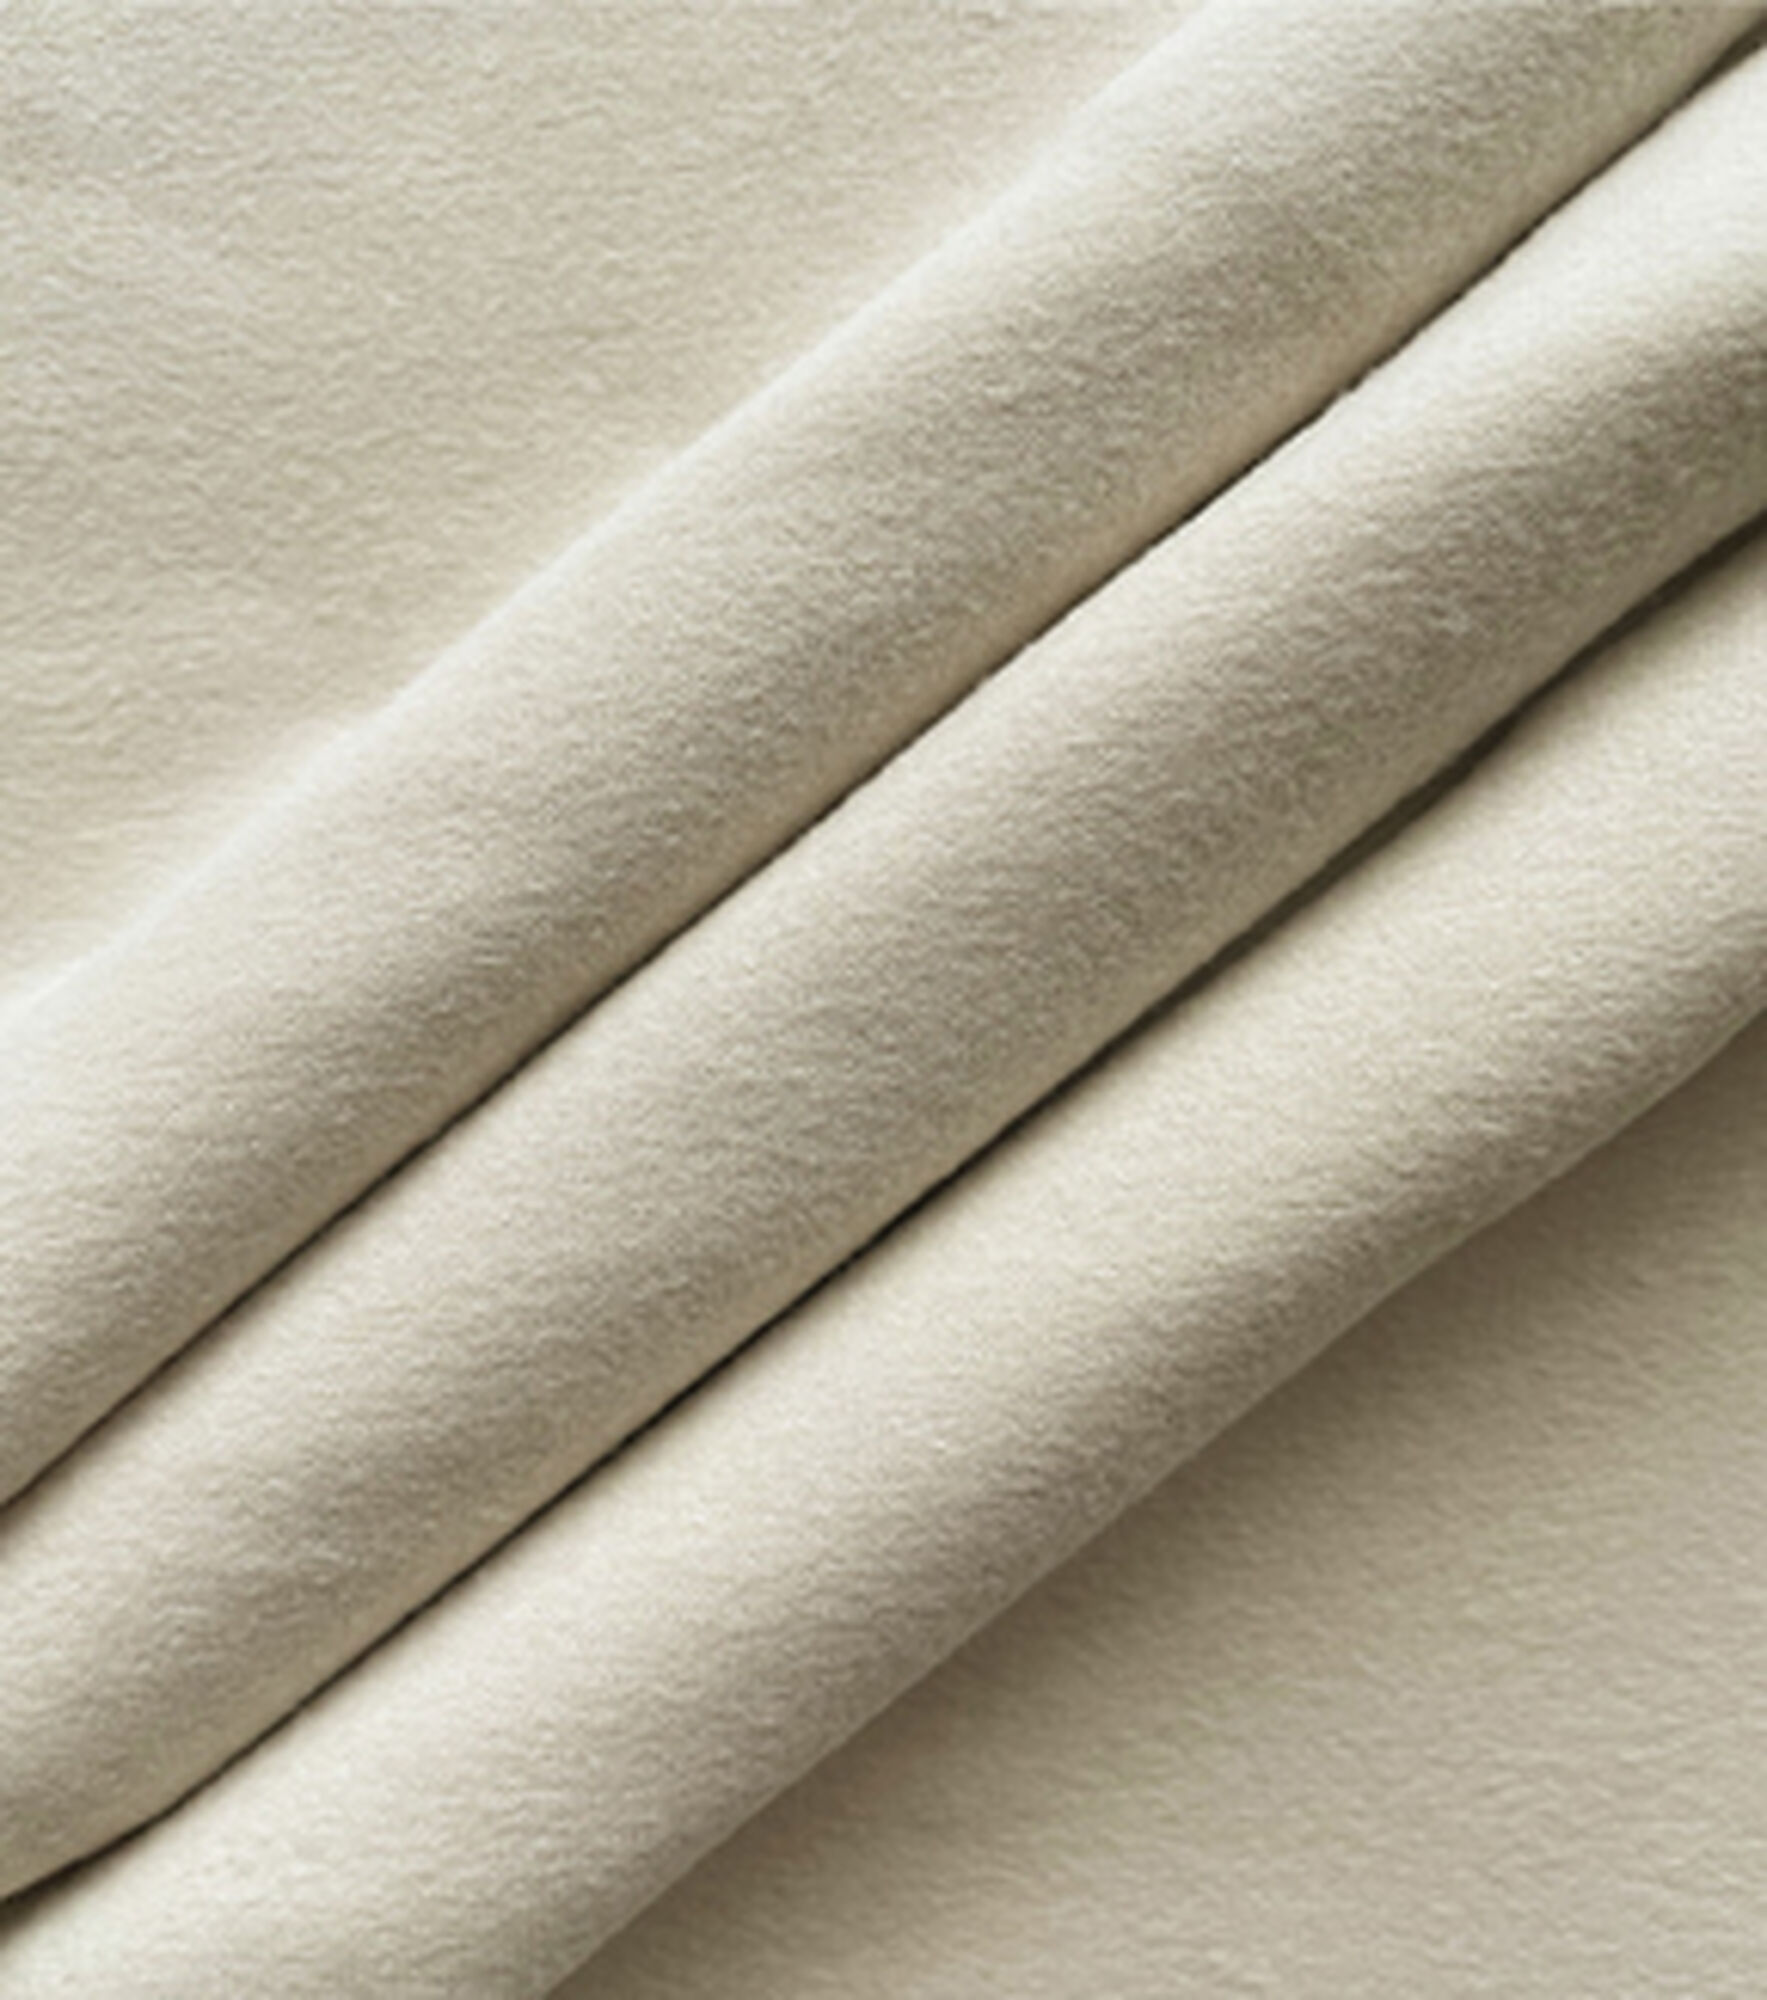 Fabric, Cotton Spandex, Cotton Double Knit Spandex Fabric 1/2 Yard